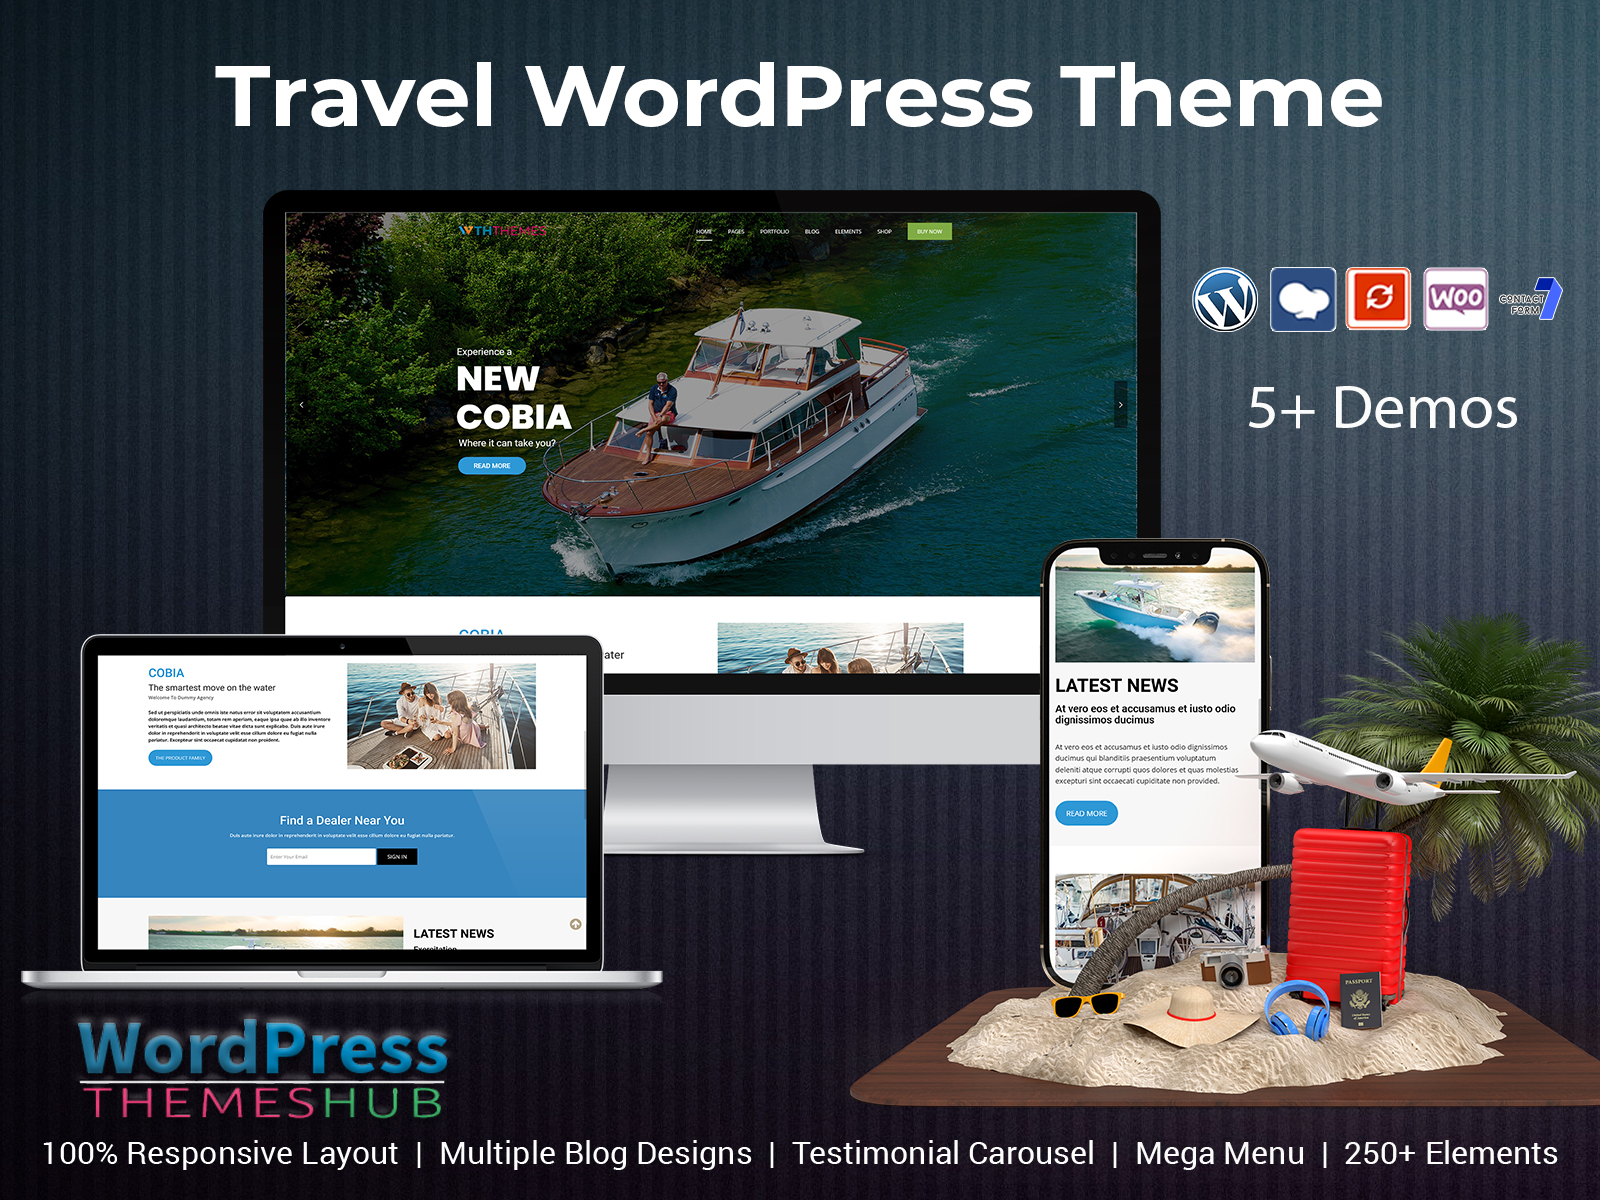 Amazing Travel WordPress Theme To Make Travel Websites